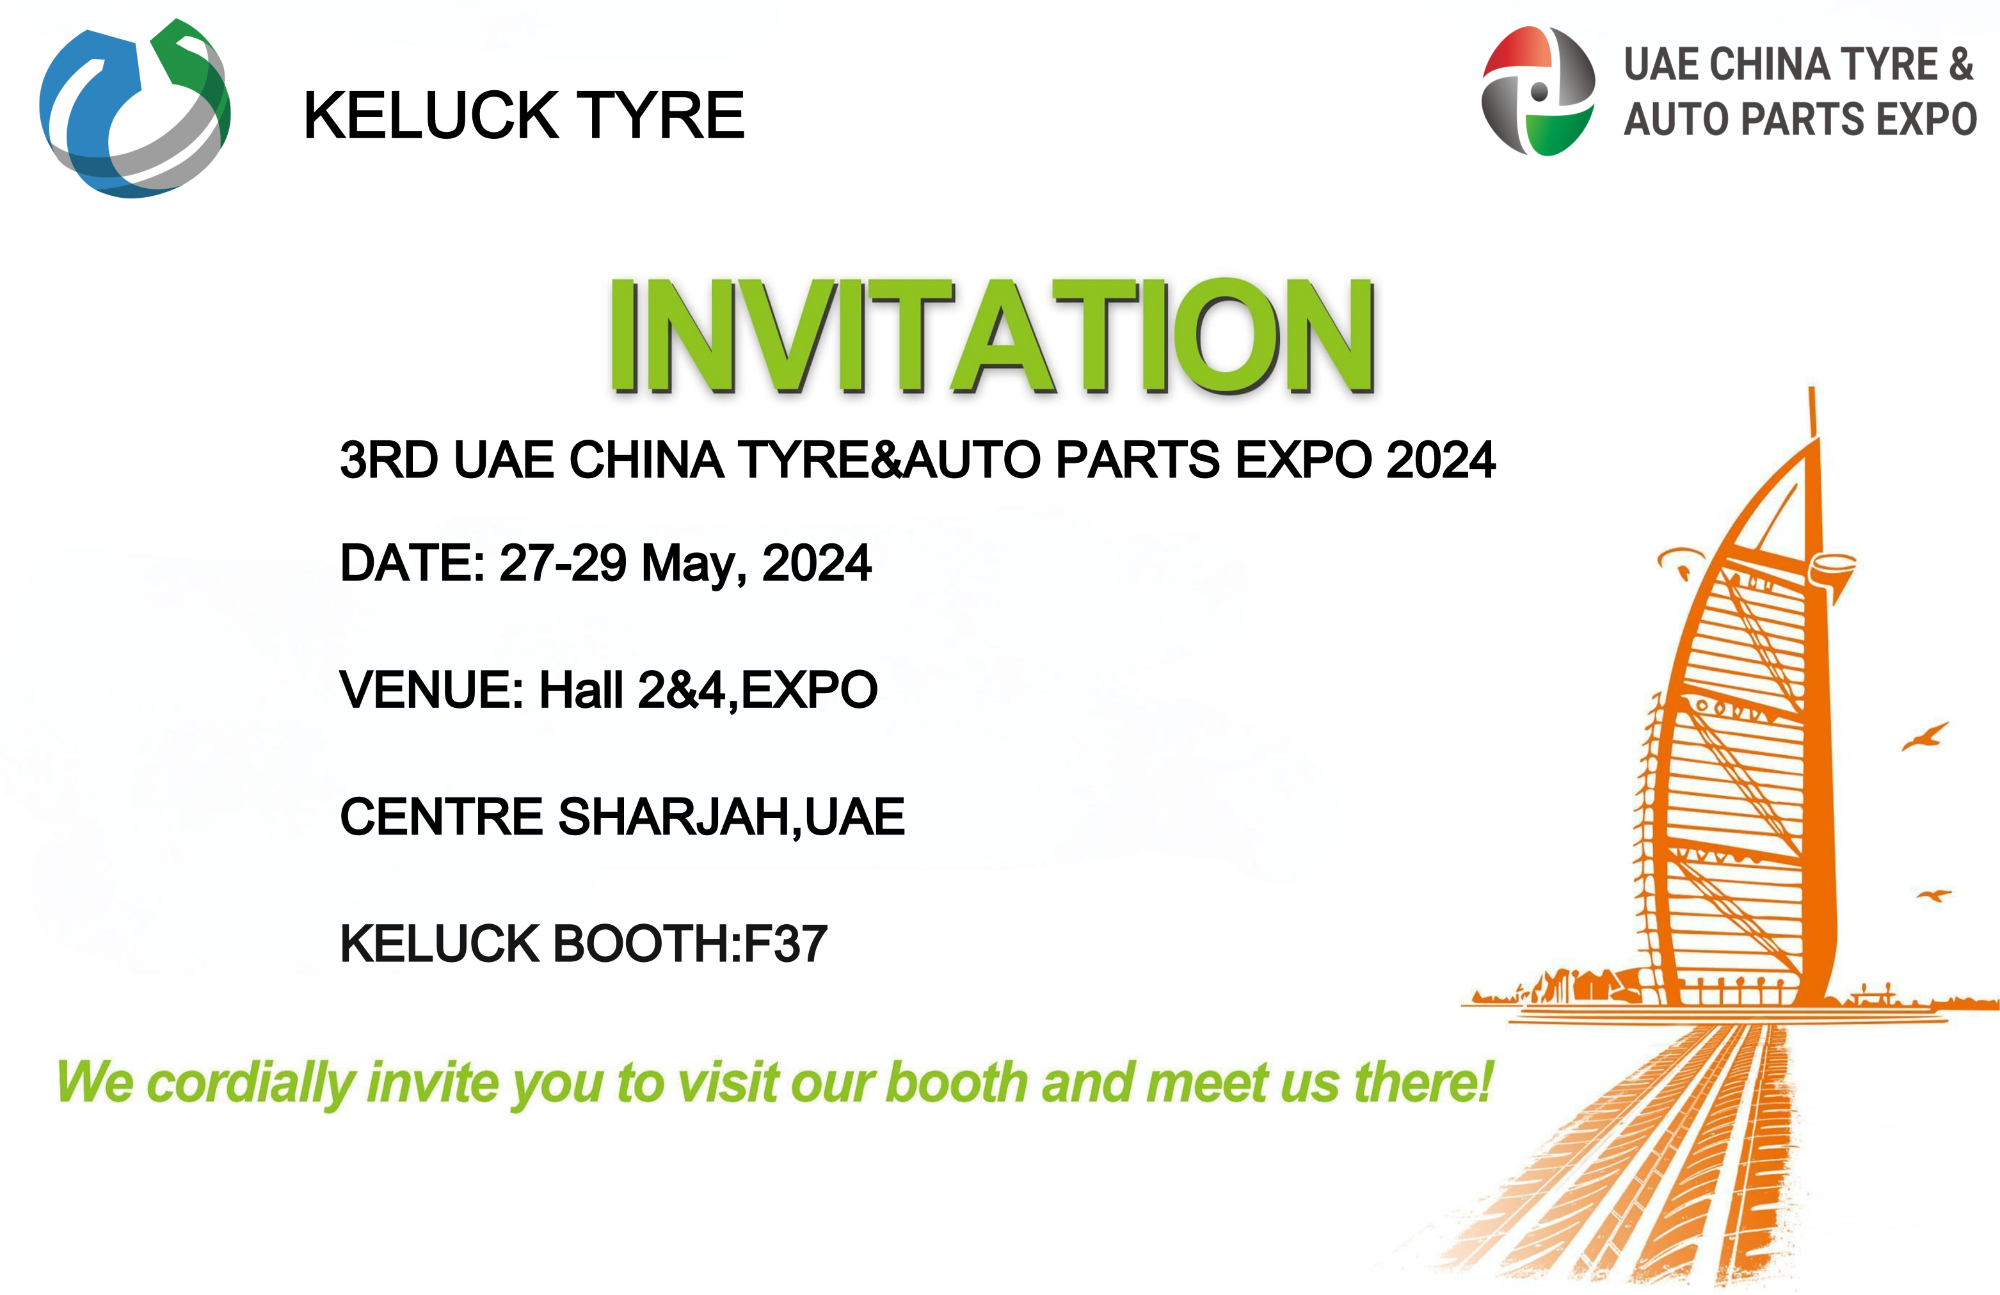 UAE China Tyre & Auto Parts Expo 2024 -KELUCK TYRE WILL GO